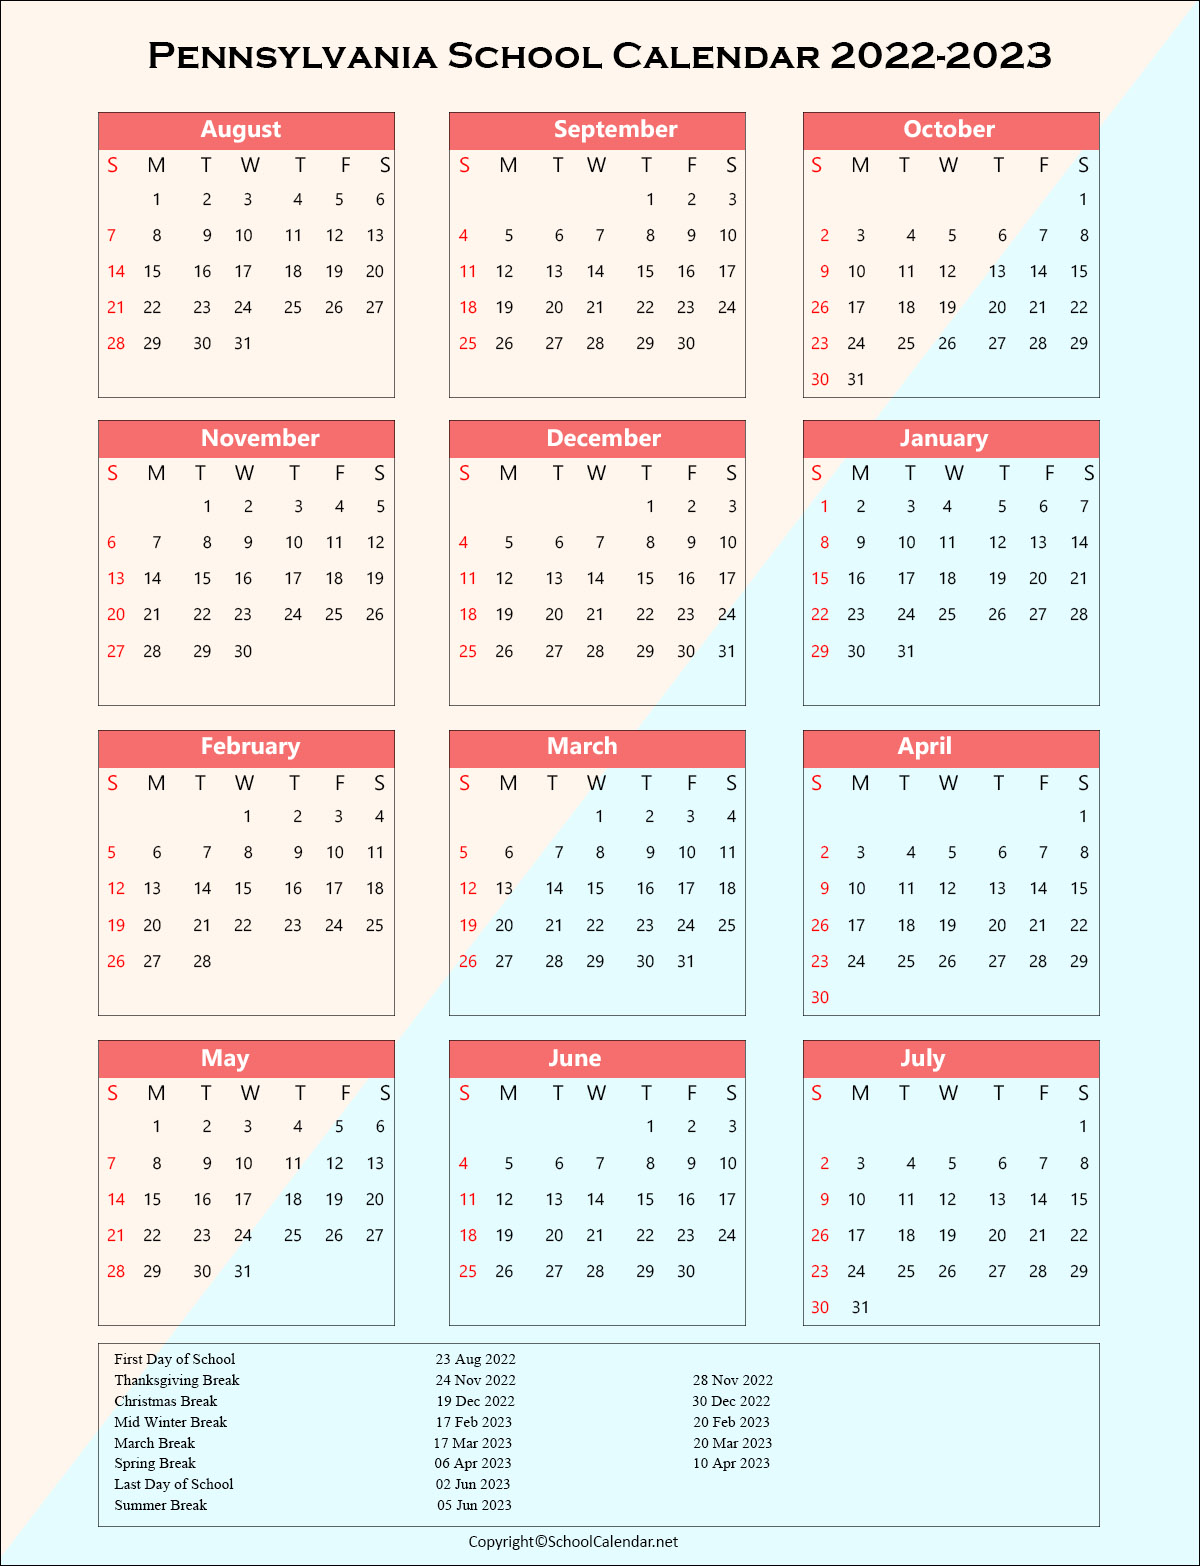 Pennsylvania School Holiday Calendar 2022